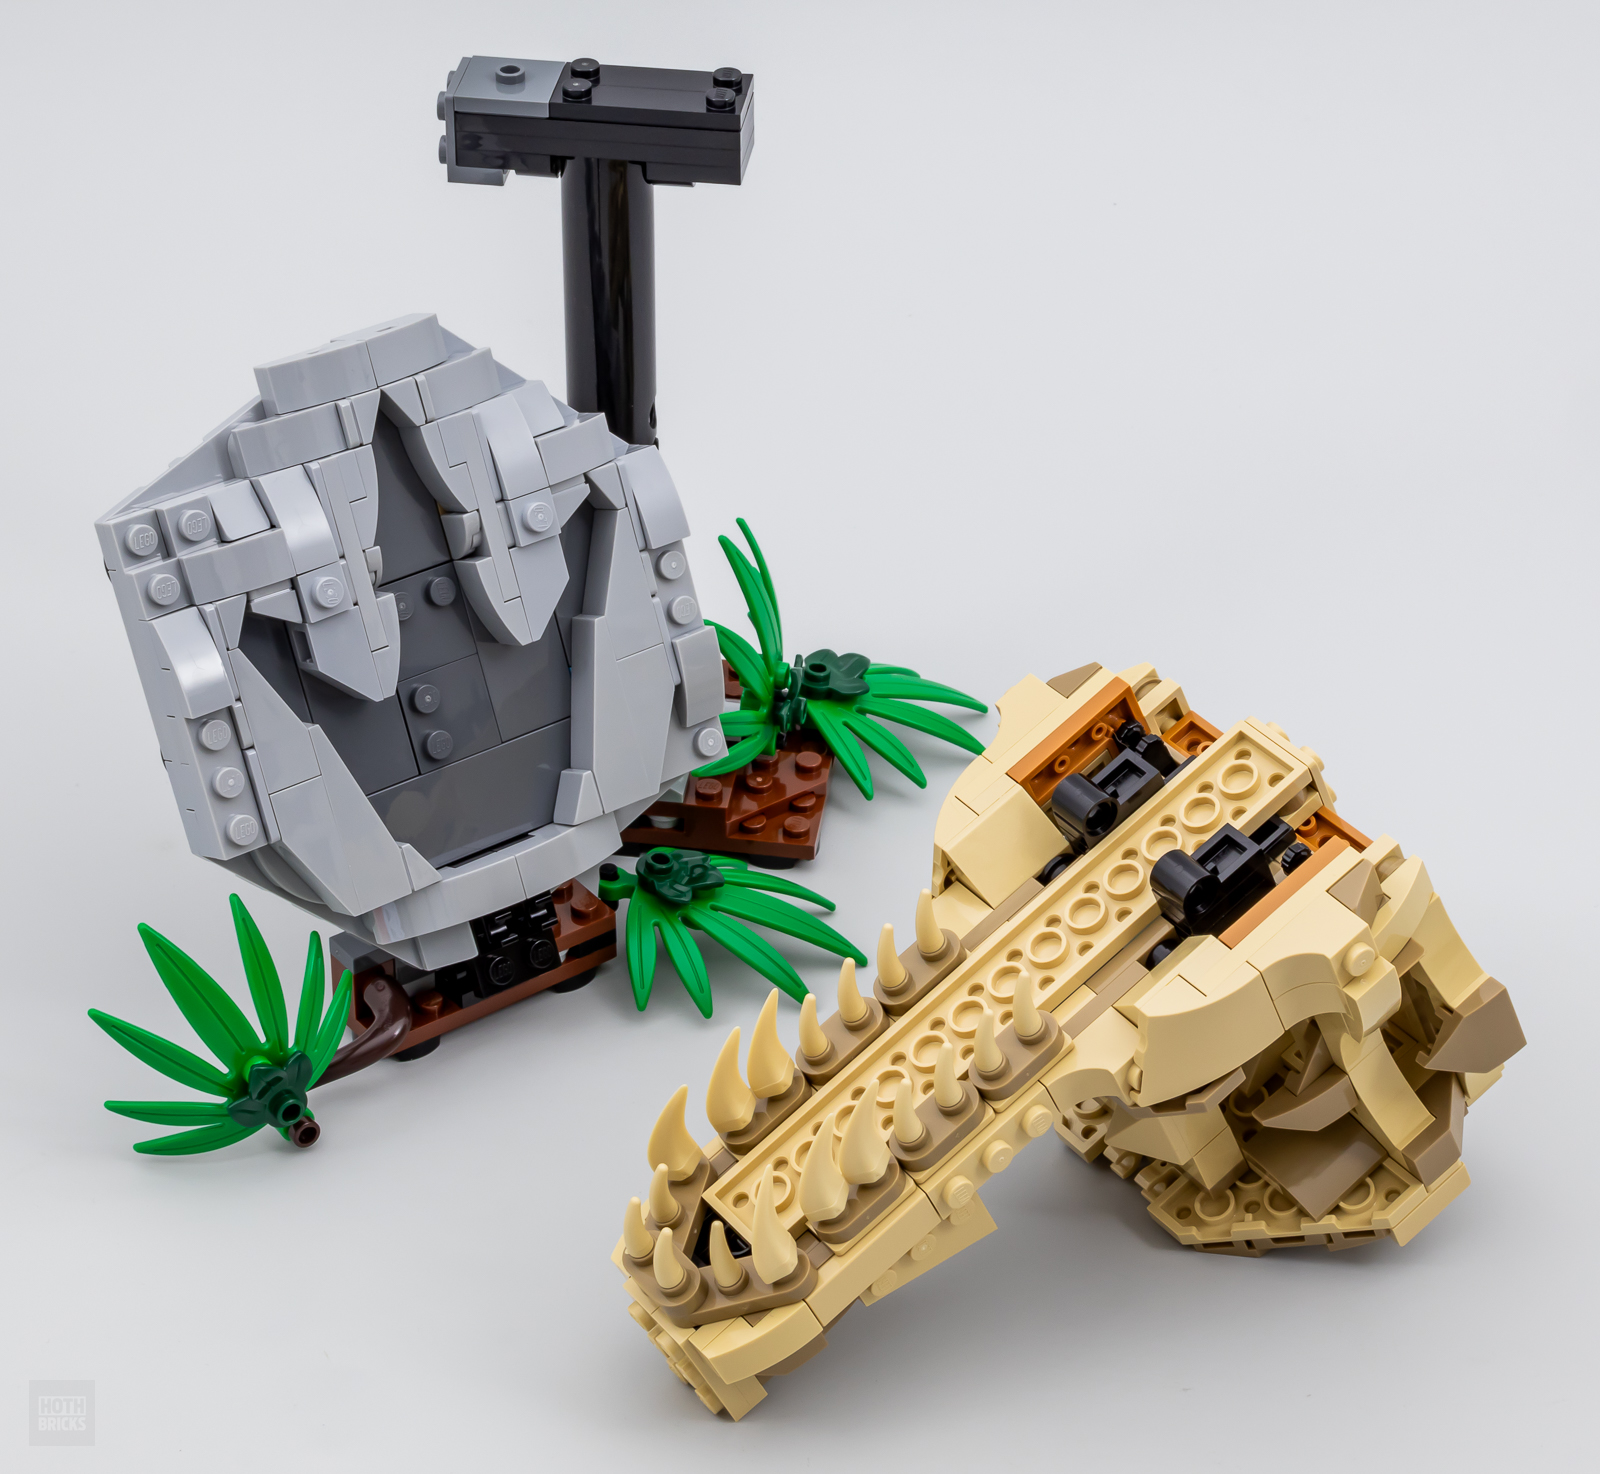 40460 - LEGO® Creator - Les Roses LEGO : King Jouet, Lego, briques